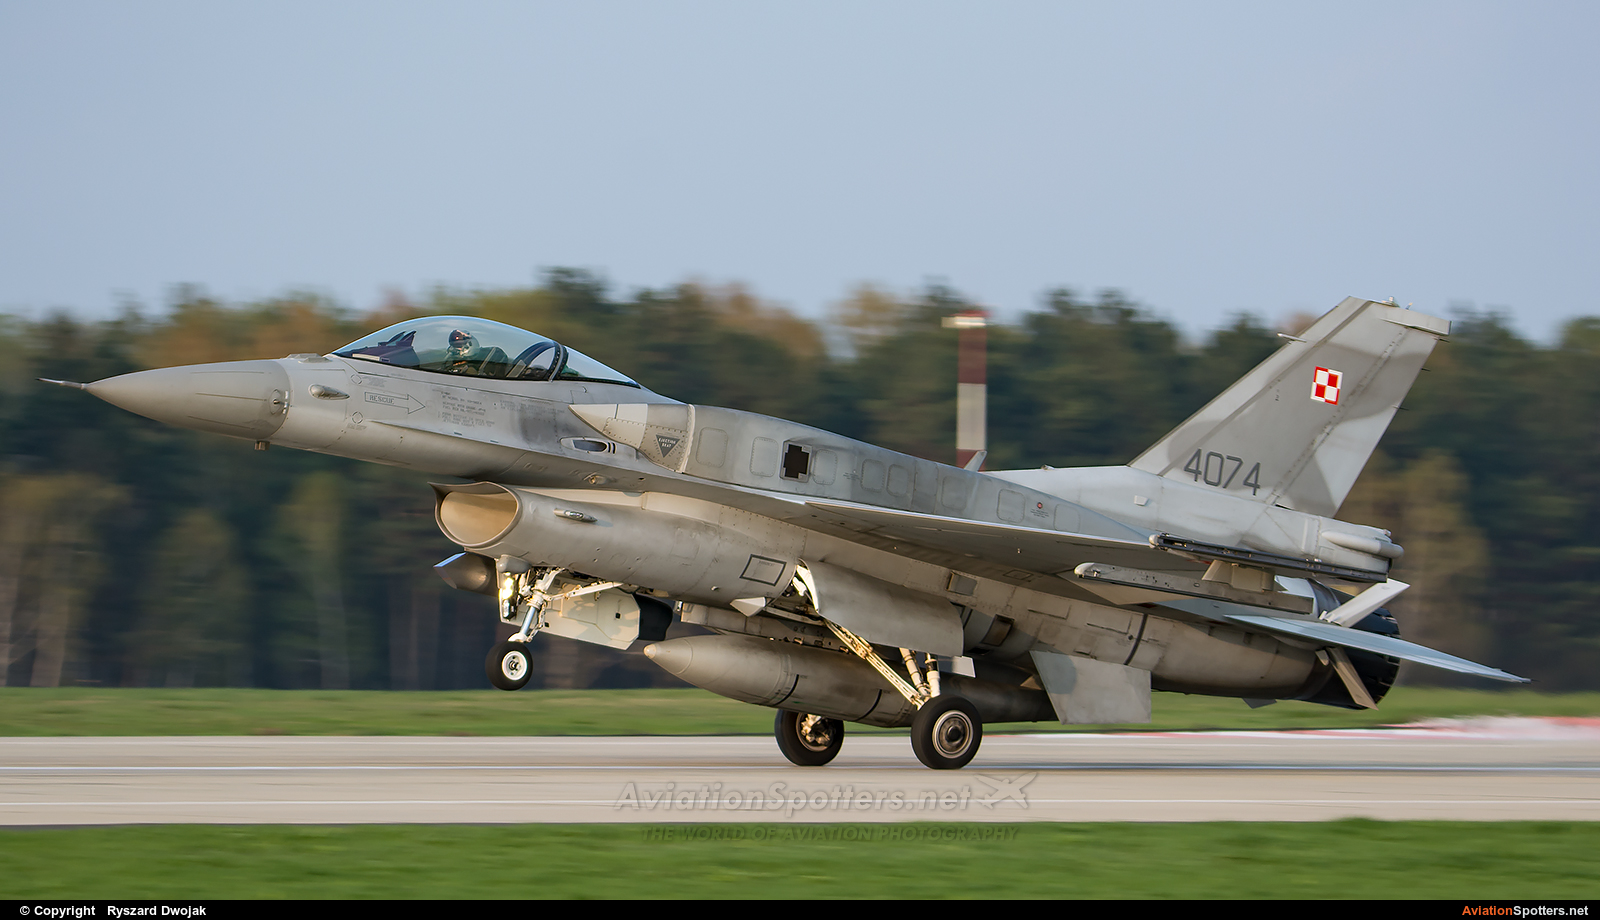 Poland - Air Force  -  F-16C Block 52+ Fighting Falcon  (4074) By Ryszard Dwojak (ryś)